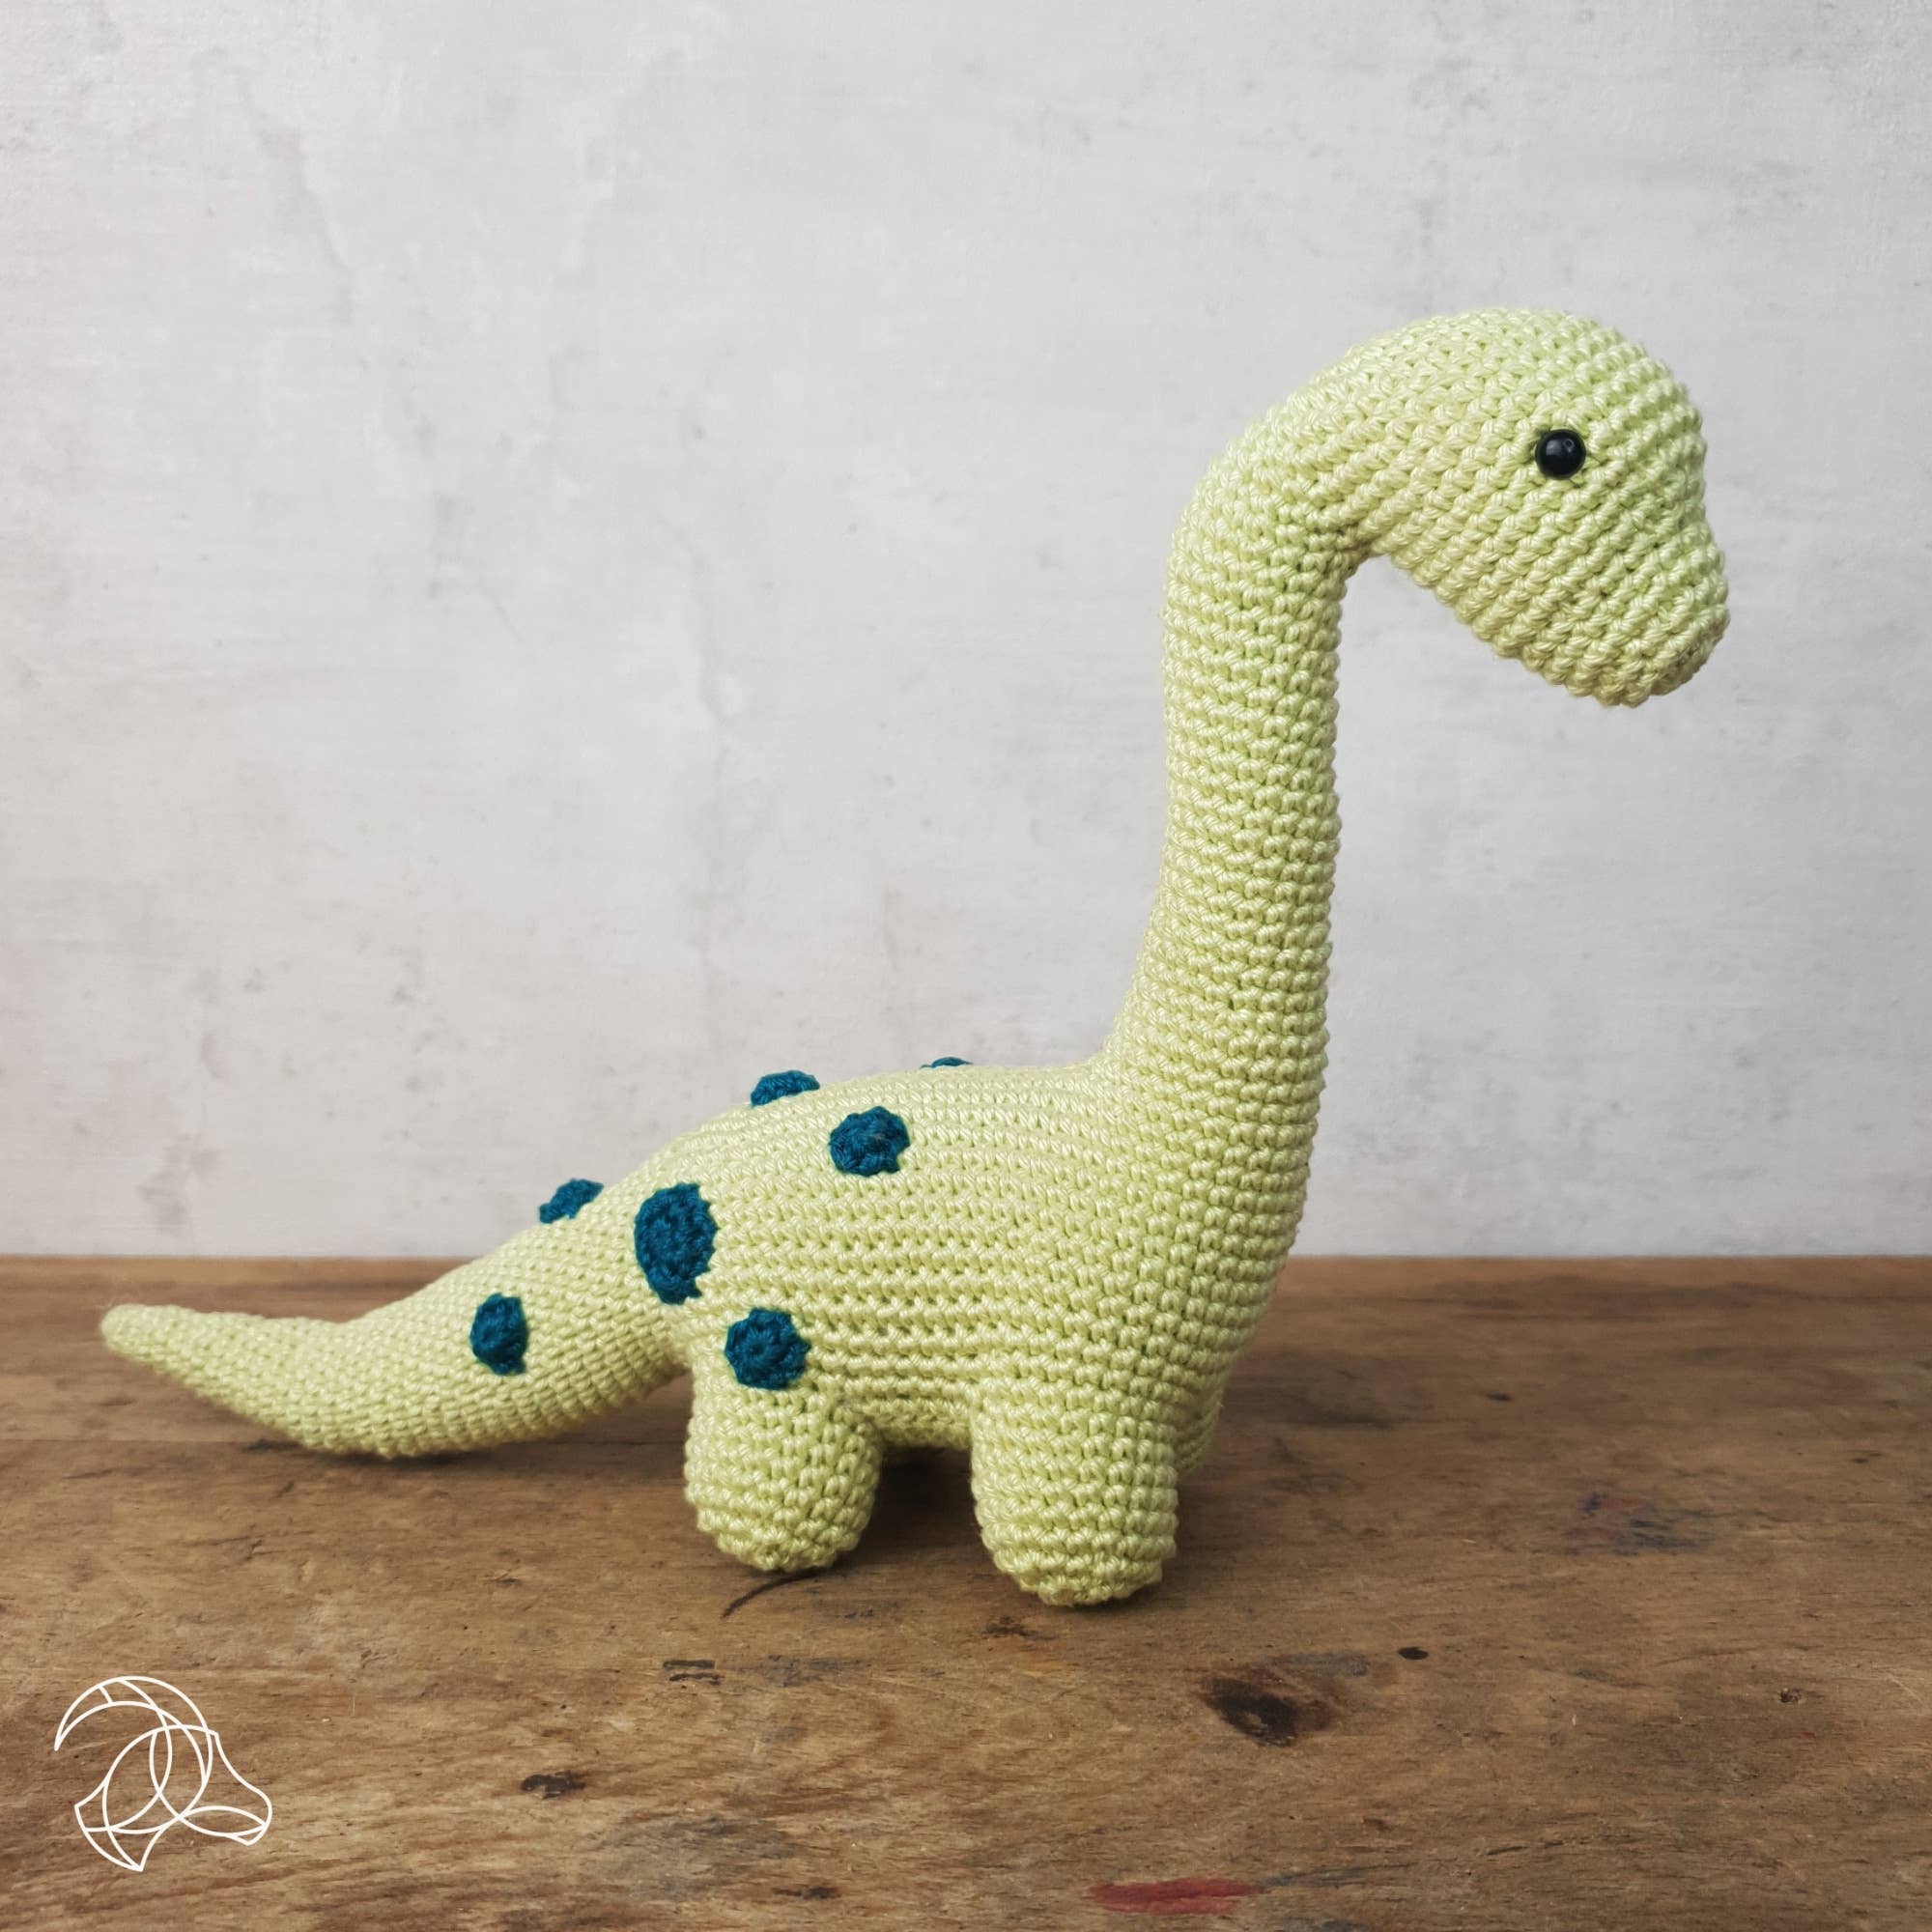 Hardicraft - DIY Crochet Kit - Brontosaurus